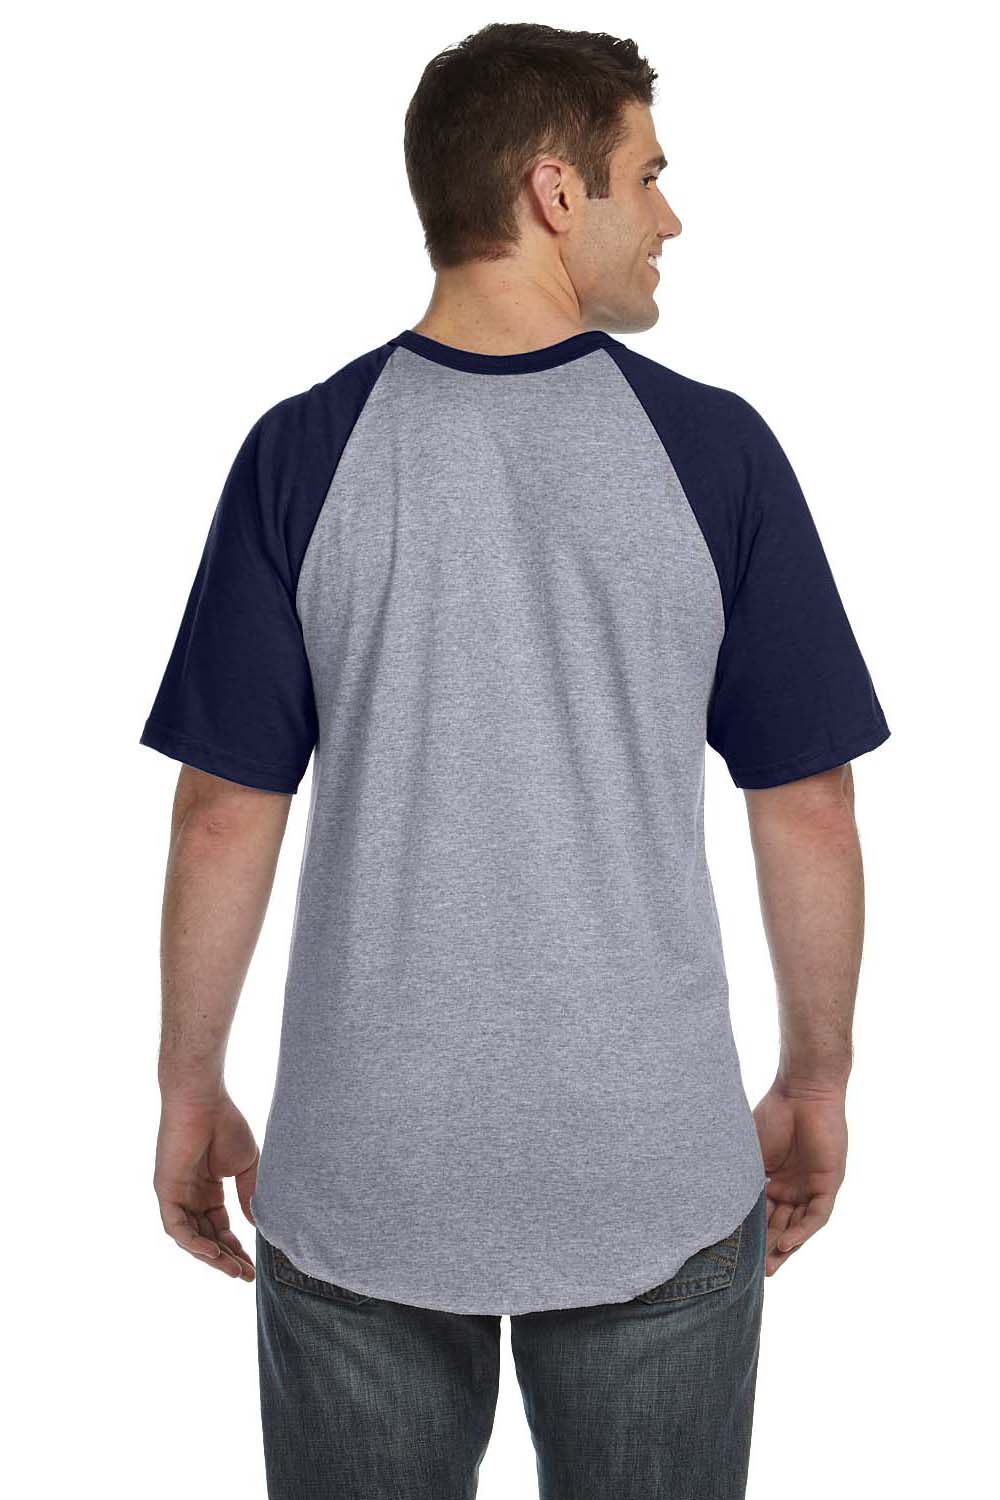 Augusta Sportswear 423 Mens Short Sleeve Crewneck T-Shirt Heather Grey/Navy Blue Model Back